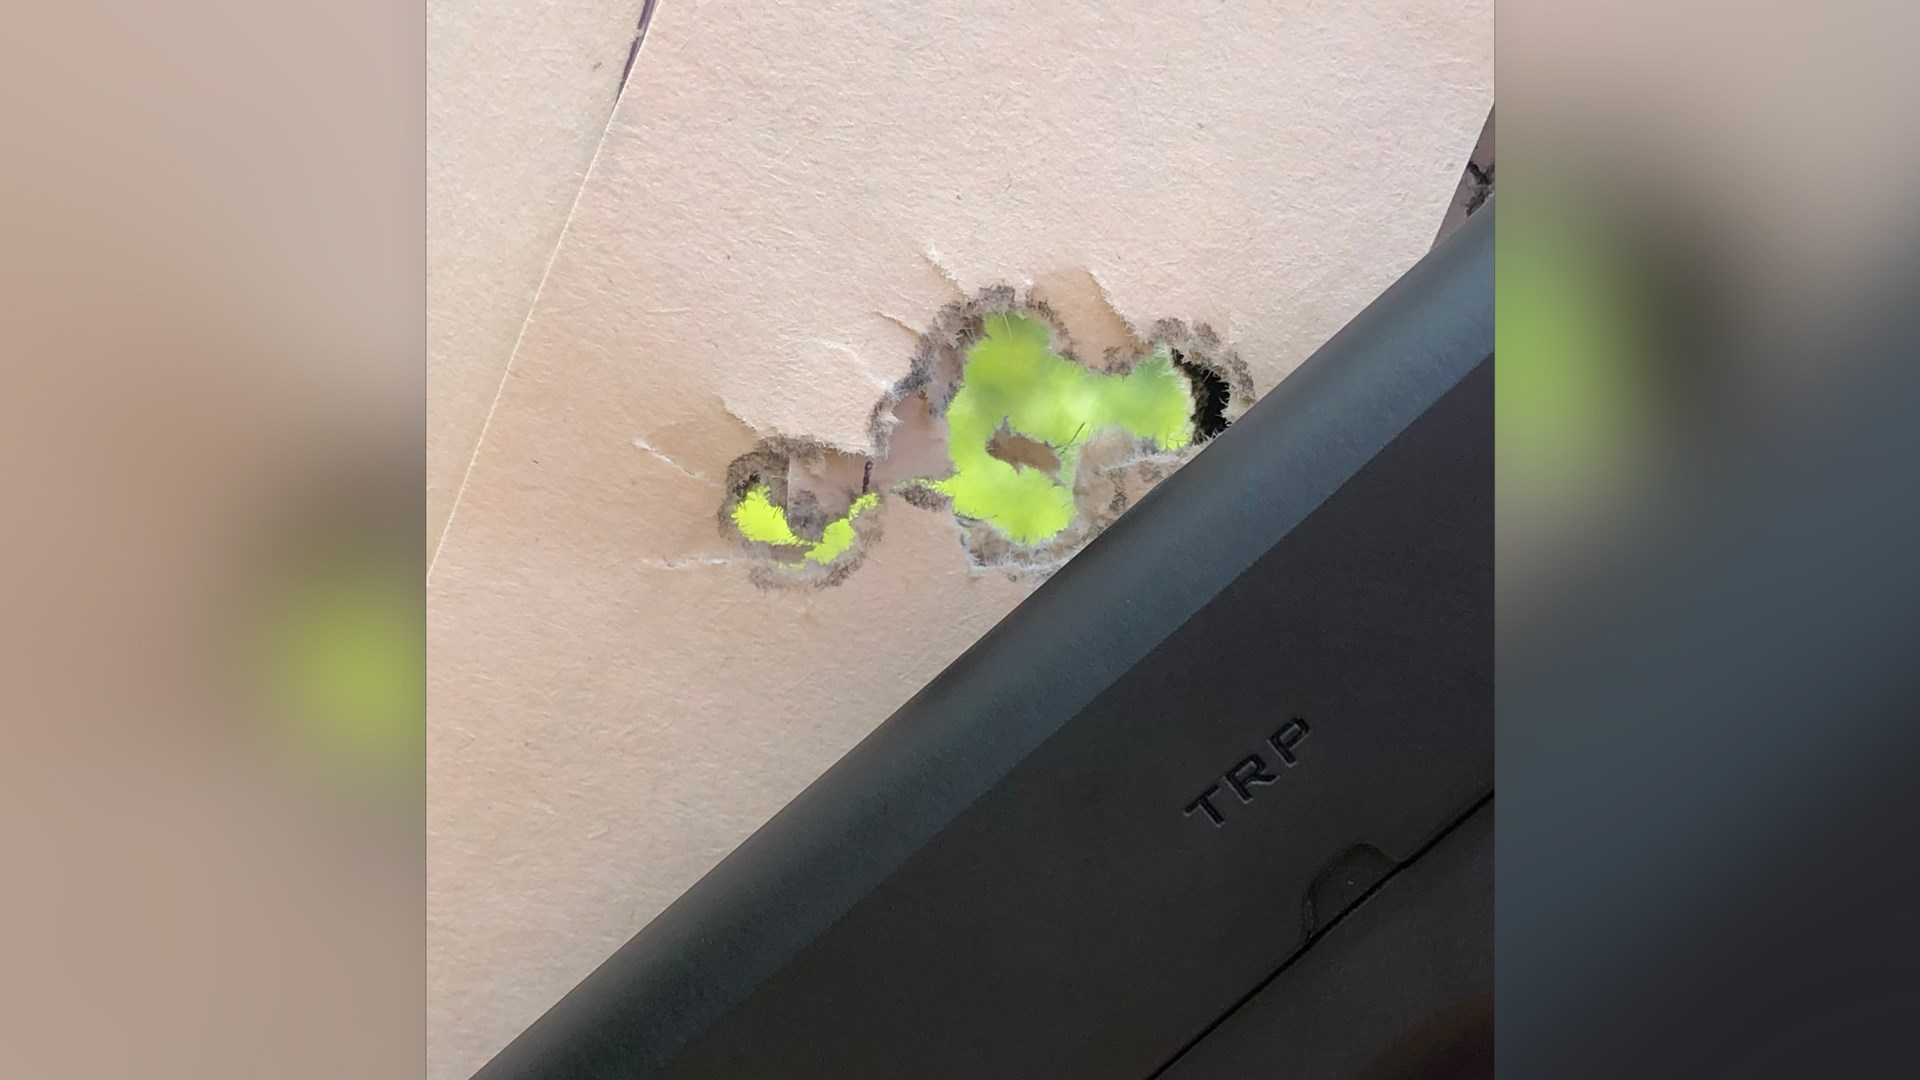 Image overlay gun springfield armory trp pistol black metal crop closeup bullet holes group tight